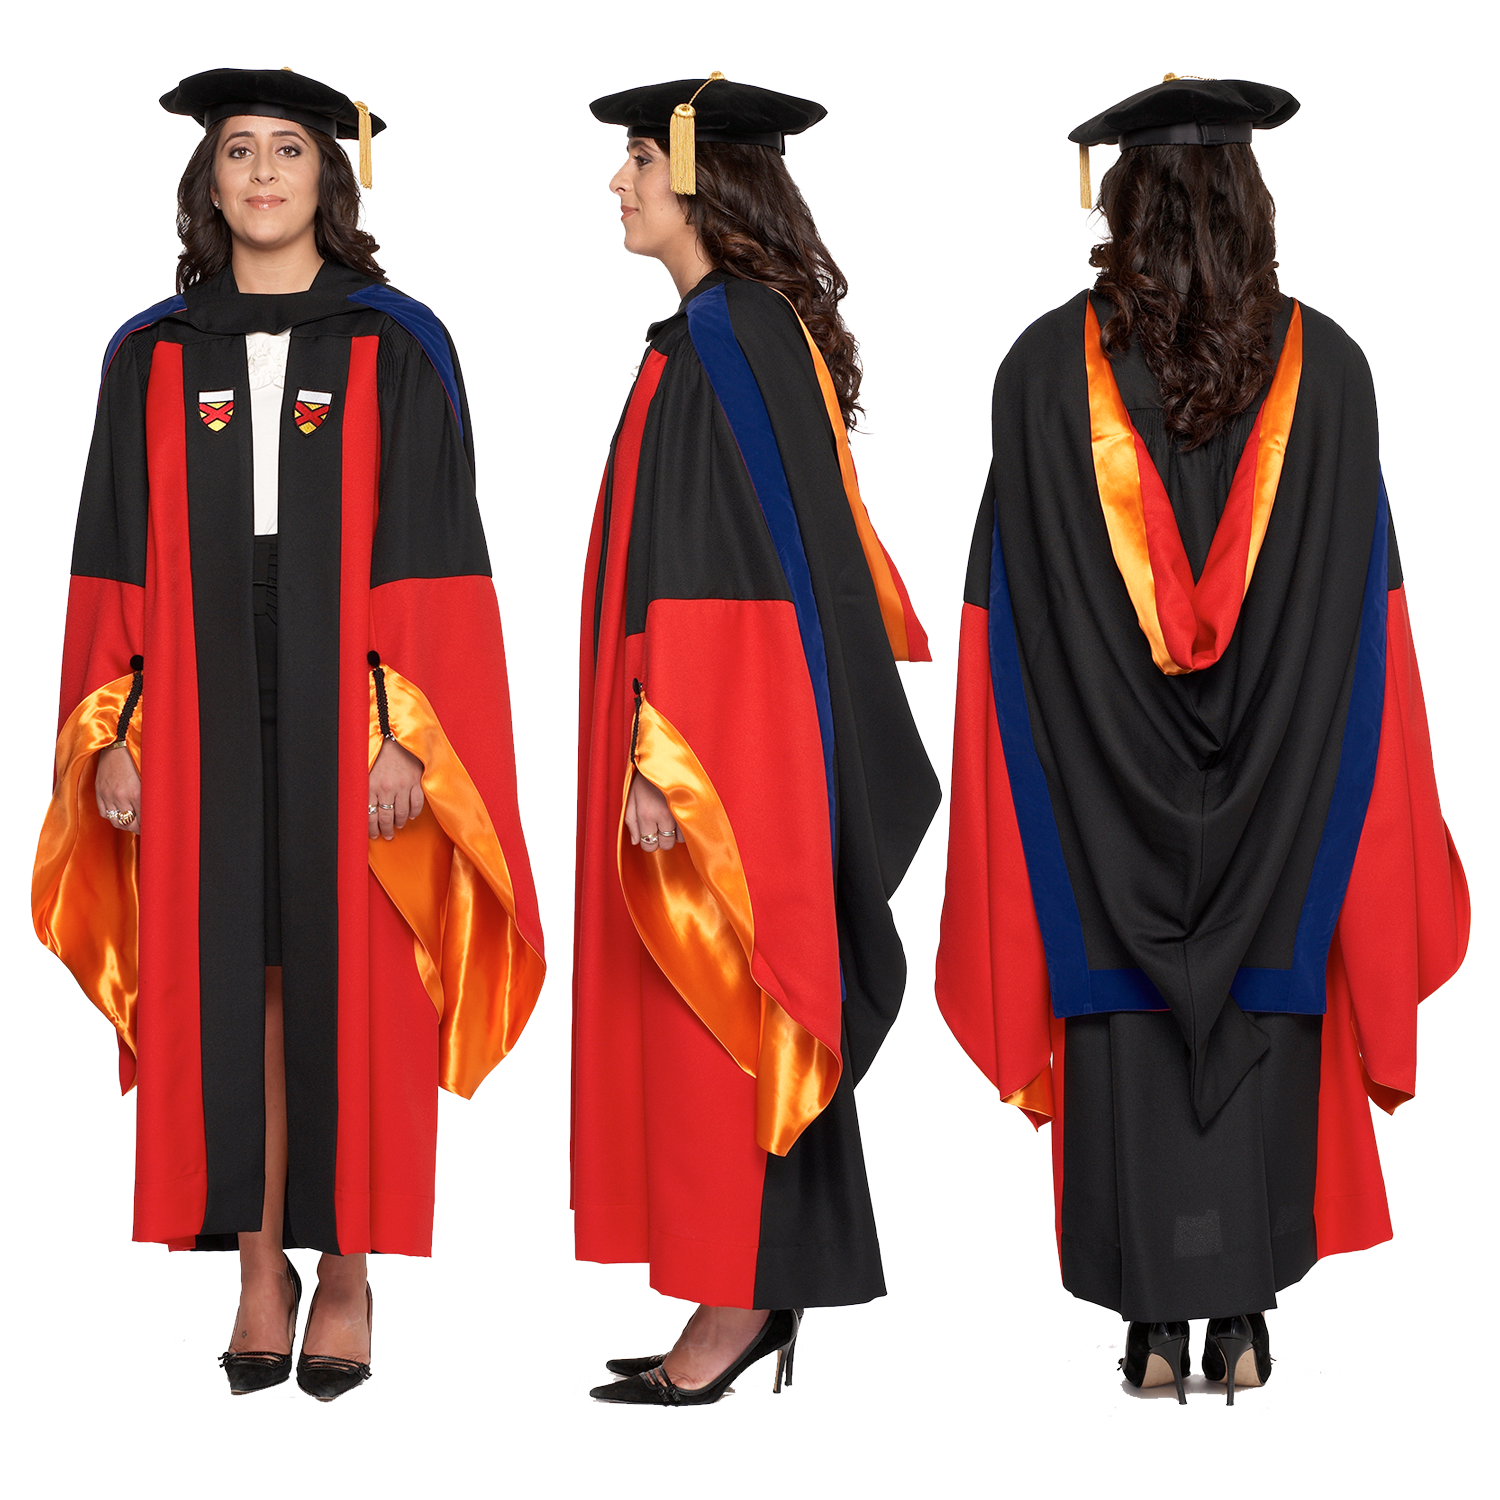 phd graduation colours